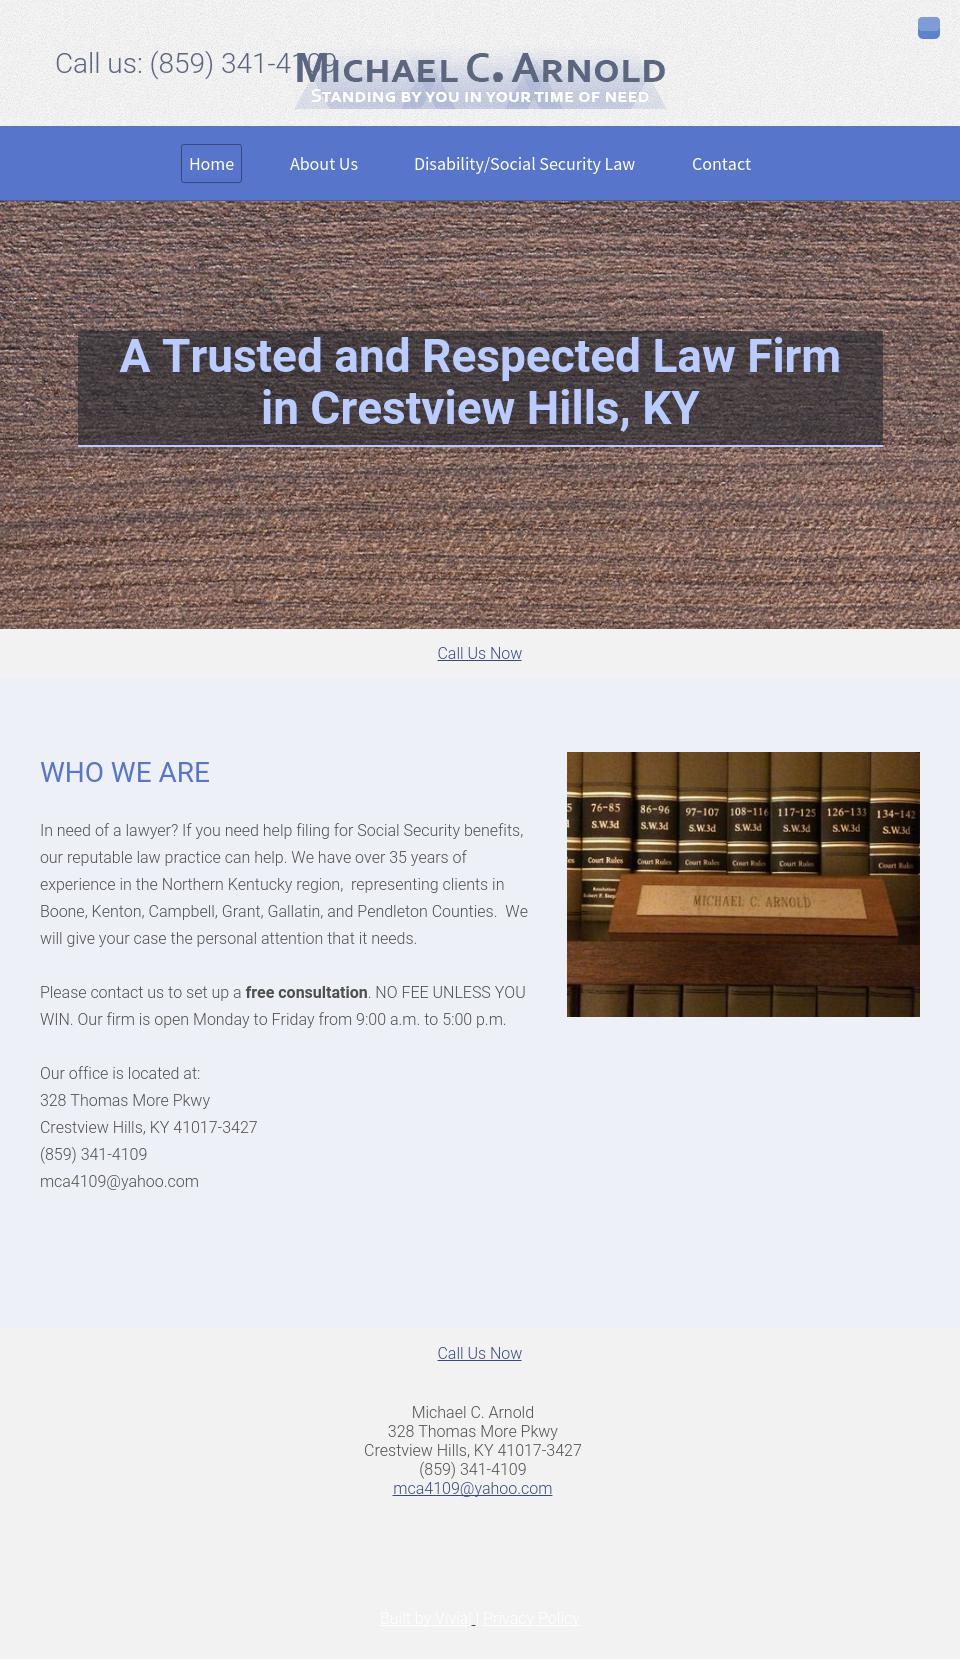 Arnold Michael C - Crestview Hills KY Lawyers